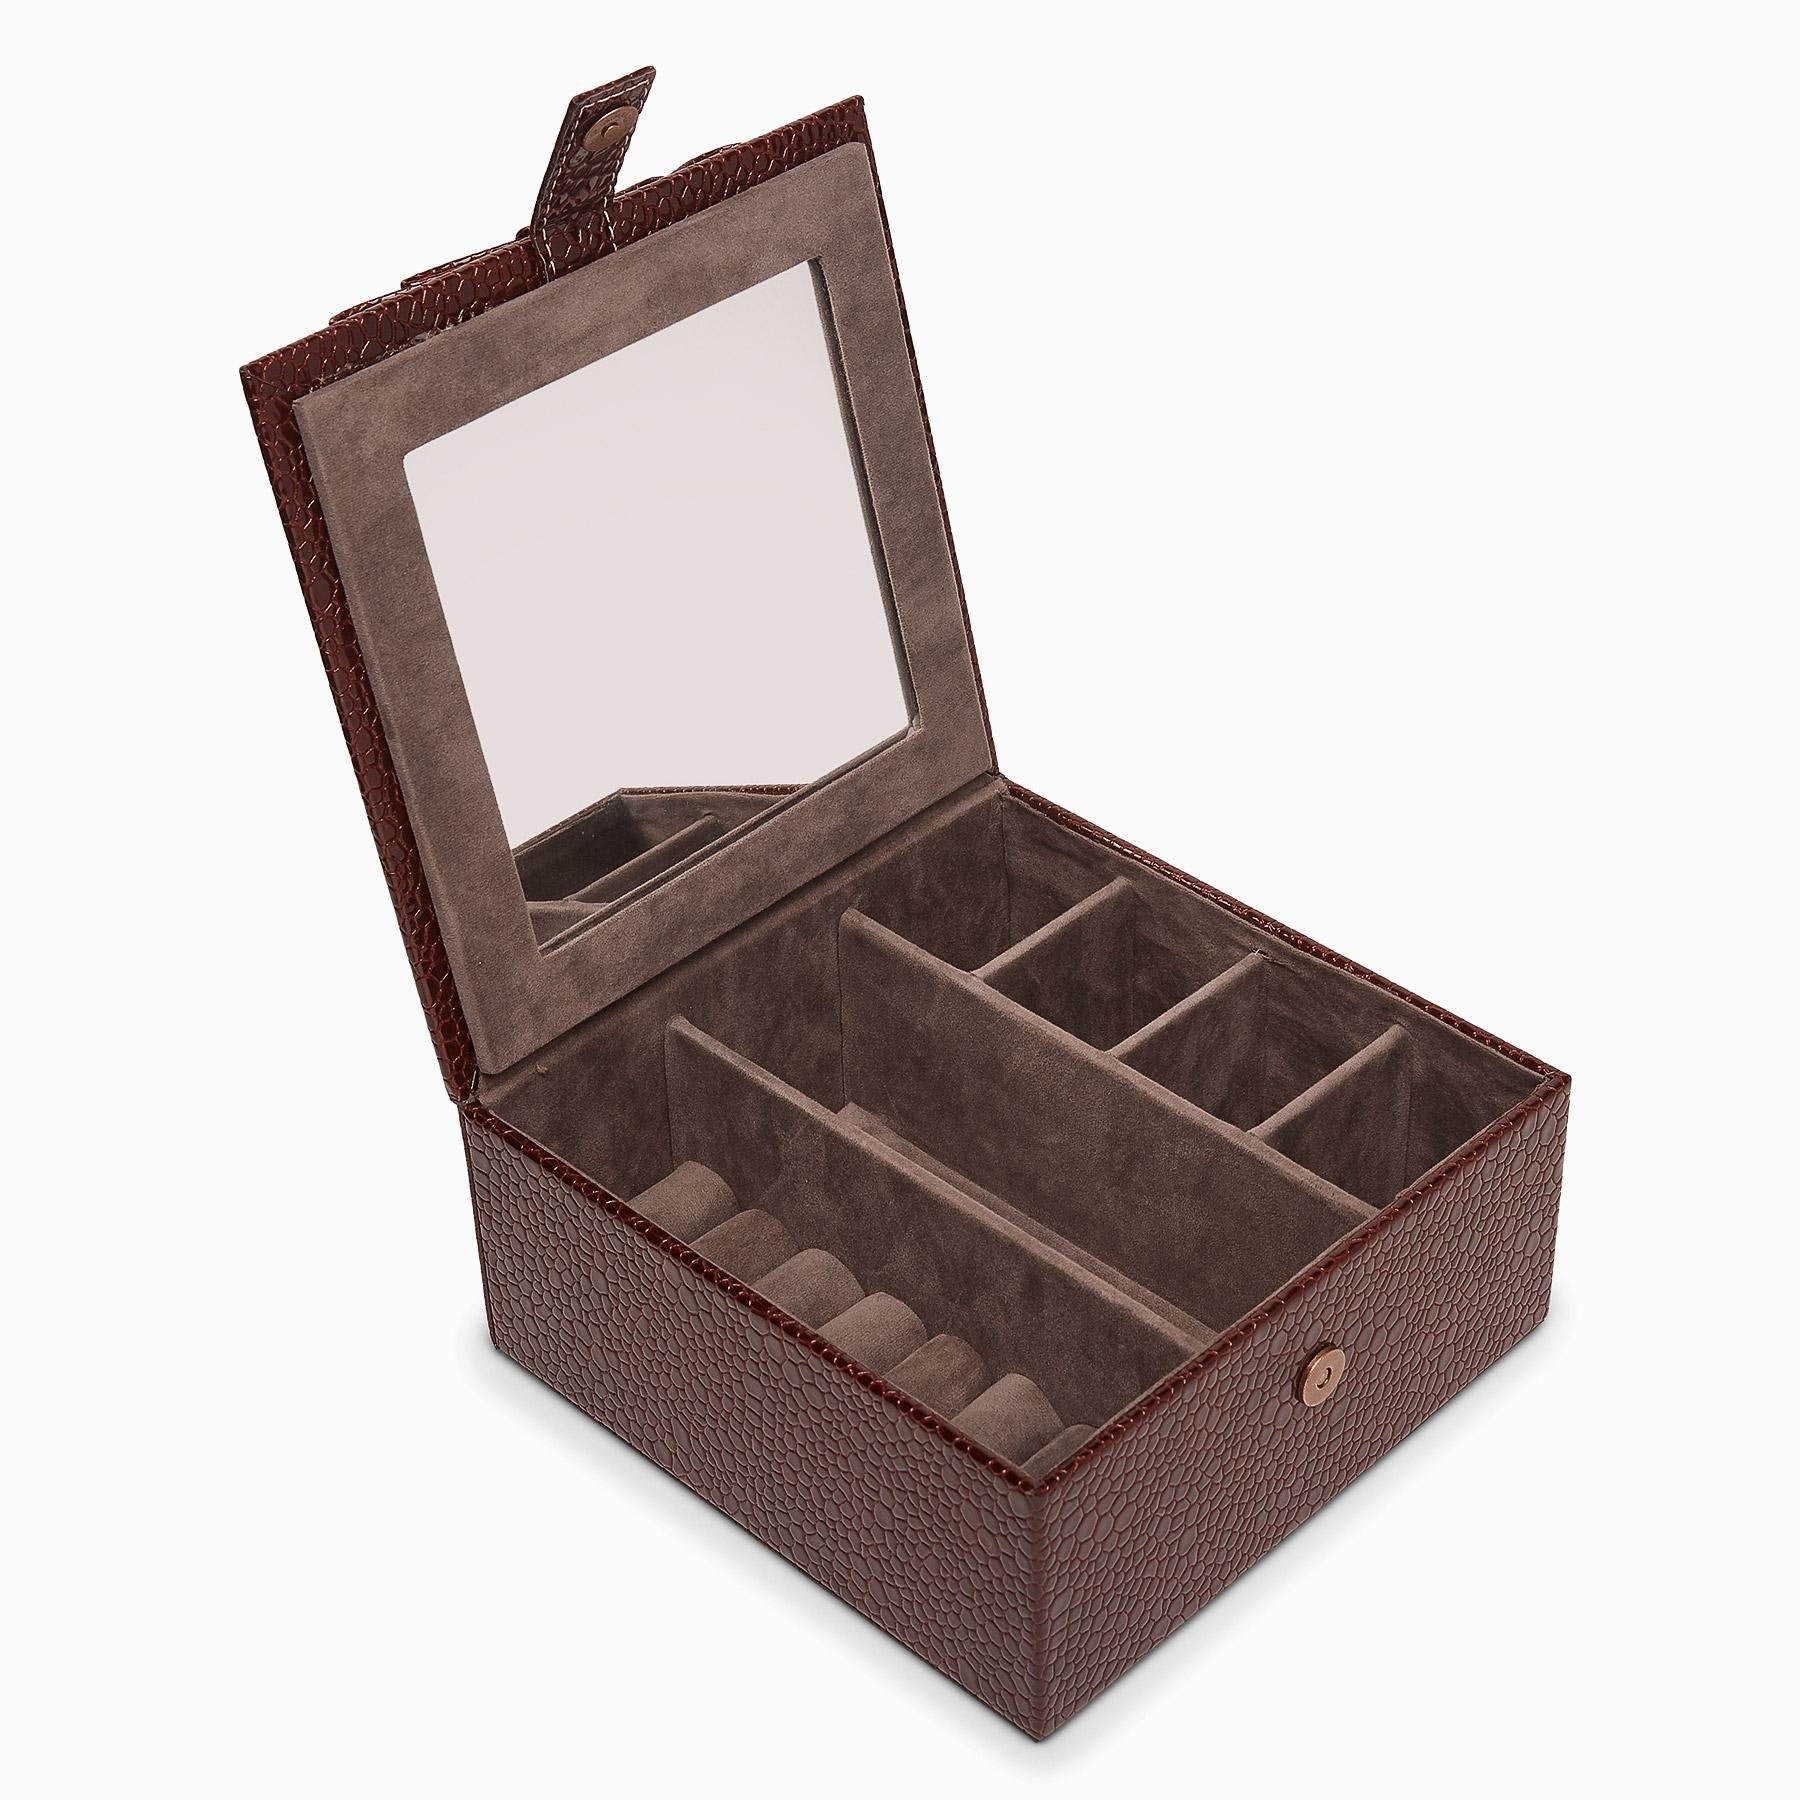 Oxblood Textured Leather Jewellery Box